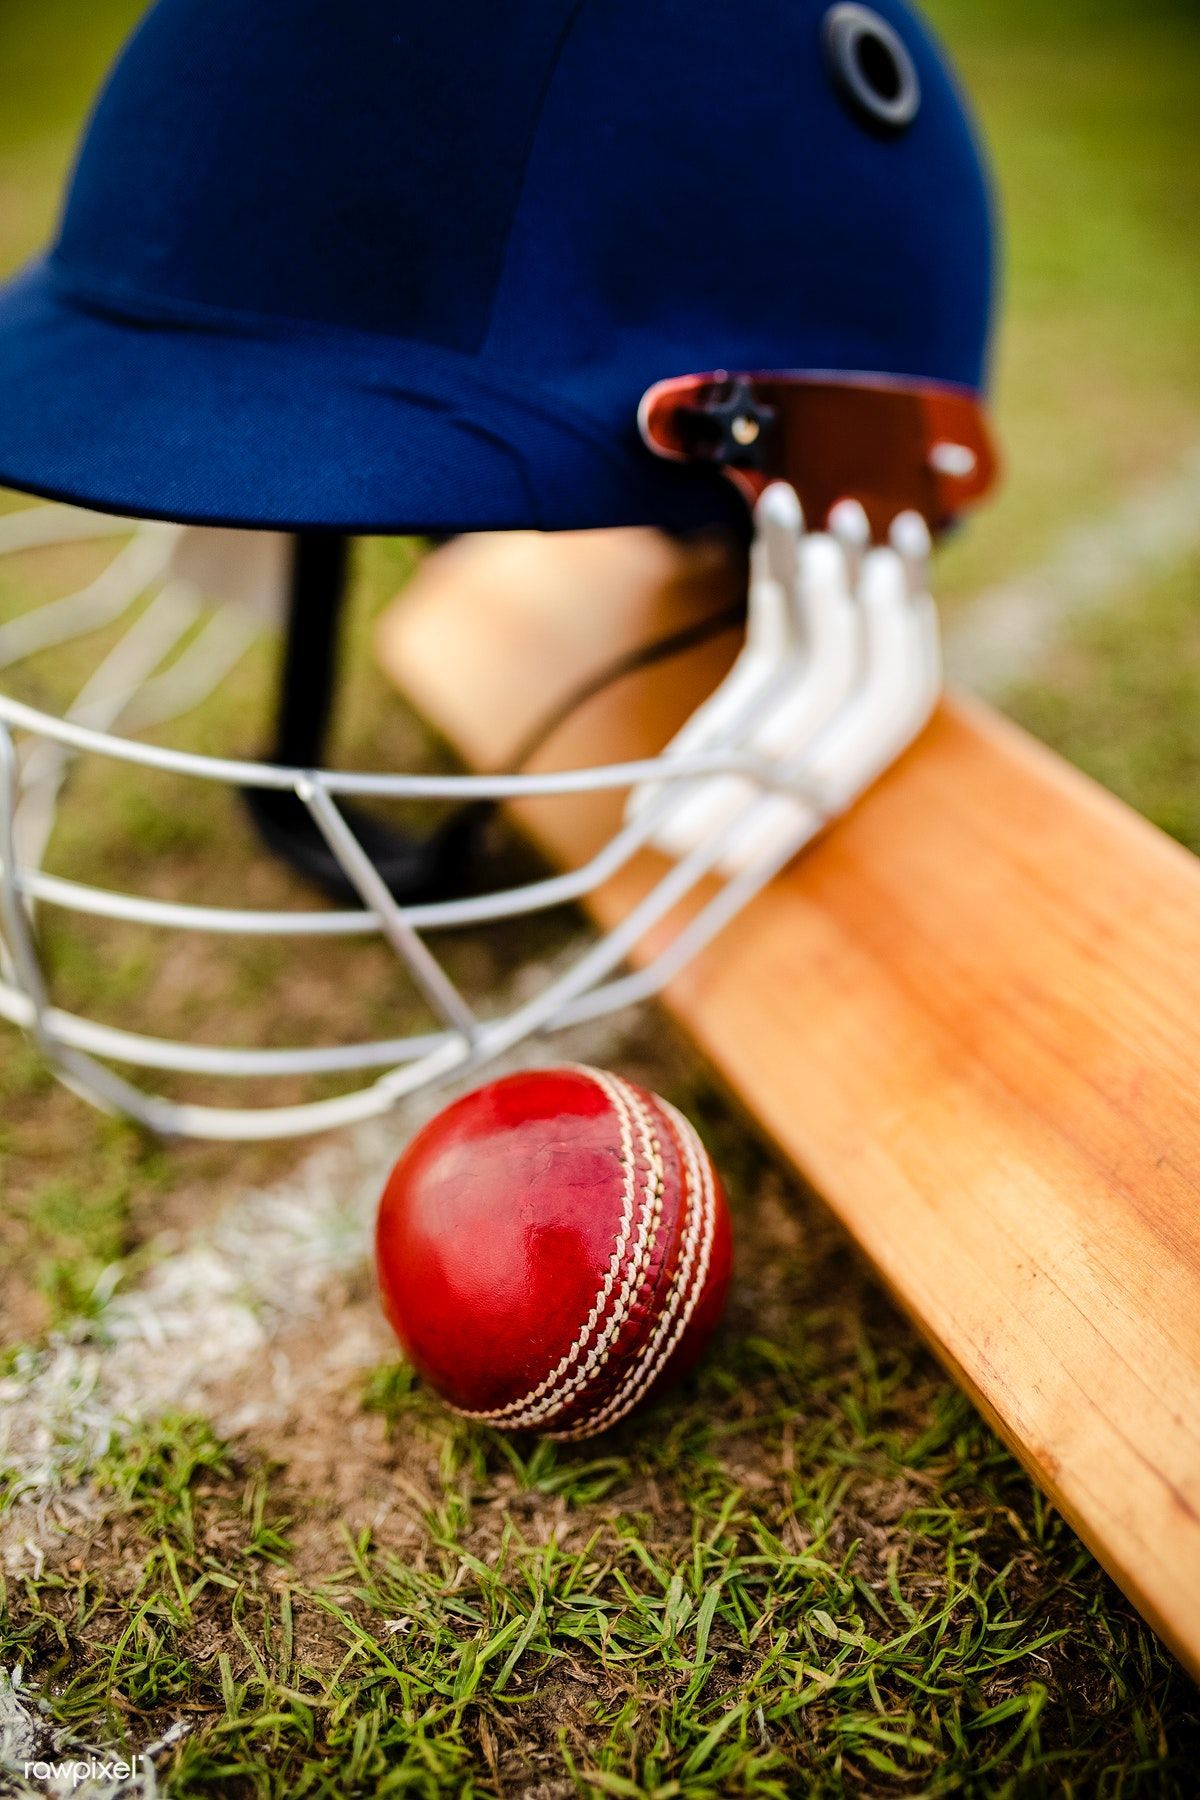 Download premium image of Cricket equipments on green grass 529046. Cricket equipment, Cricket wallpaper, Cricket bat